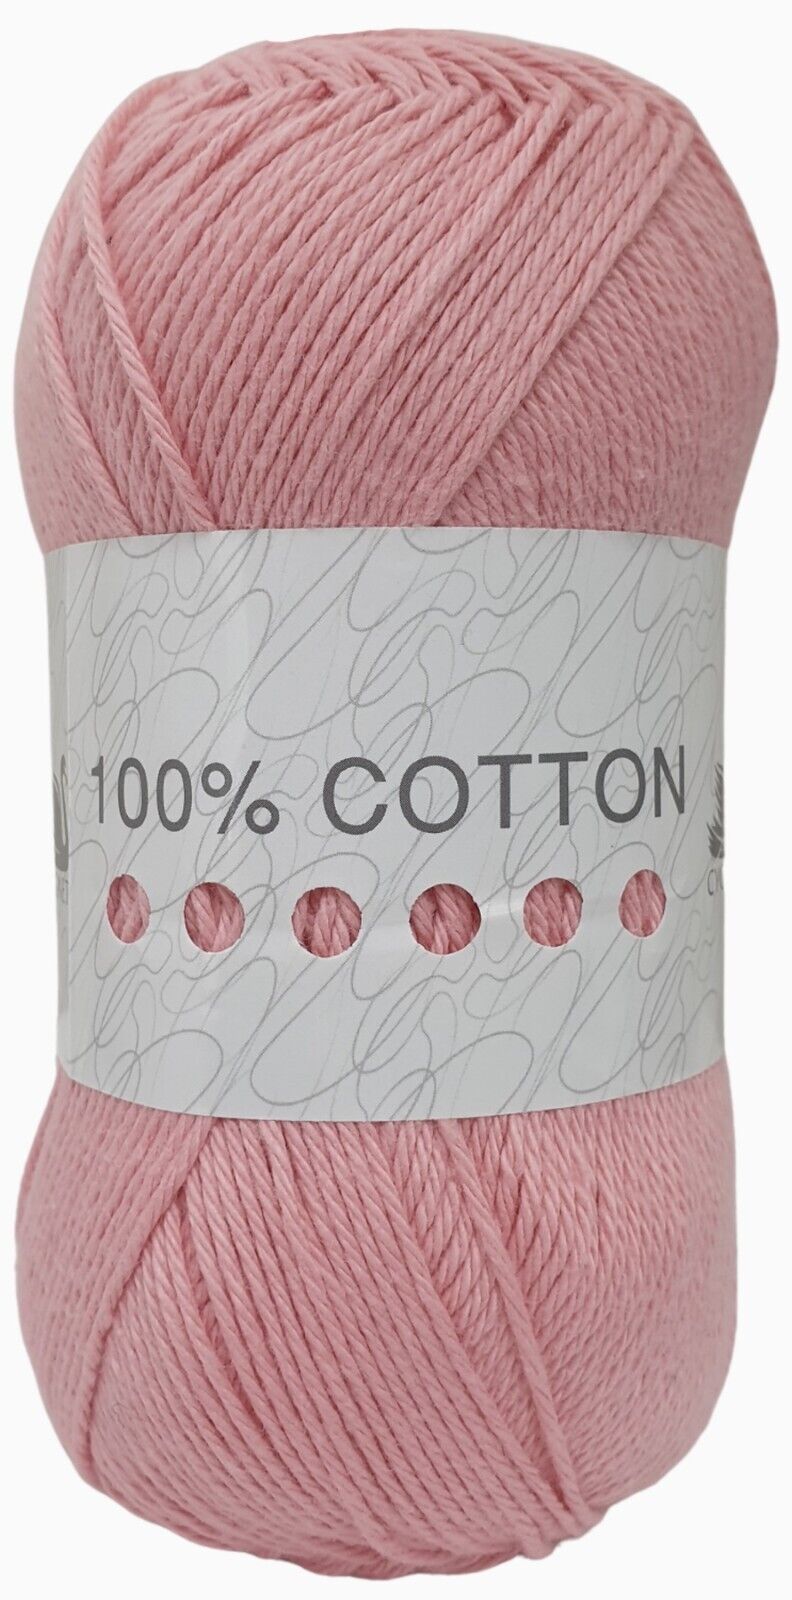 Cygnet 100% COTTON DK Knitting Yarn / Wool - 100g Double Knit Ball - Peach Sorbet